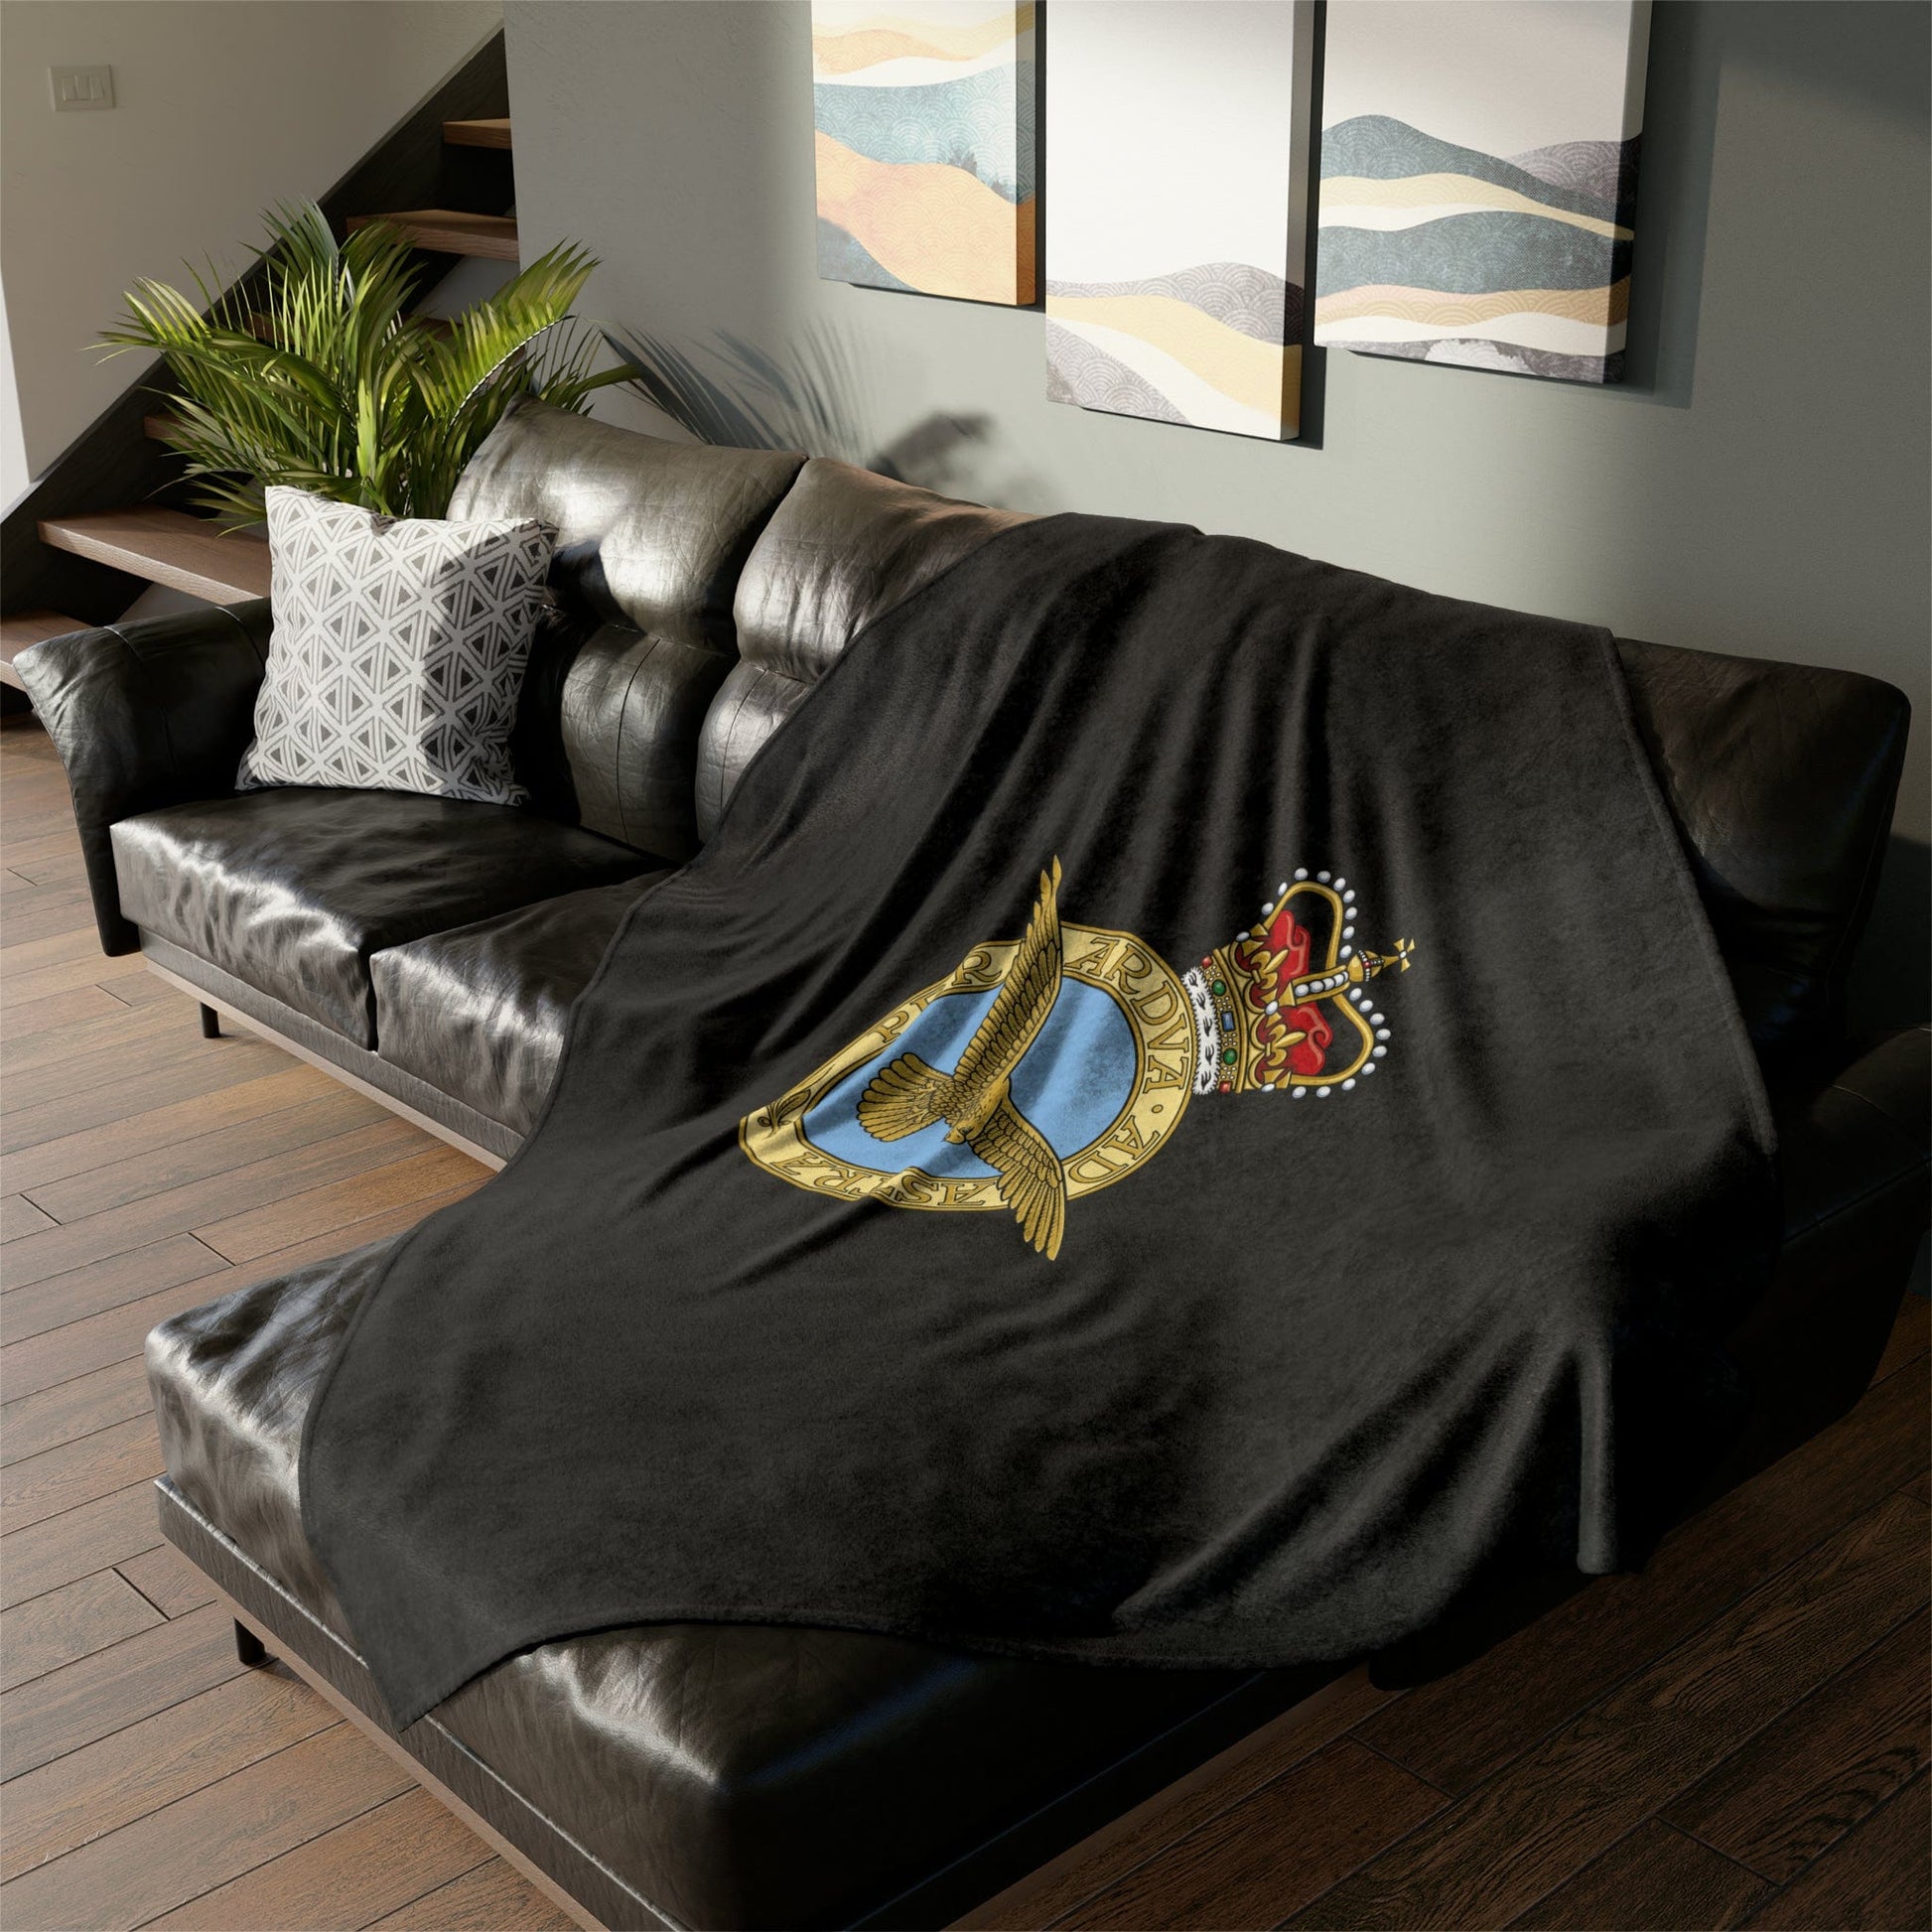 Fleece Blanket Royal Air Force Fleece Blanket (Black Background)